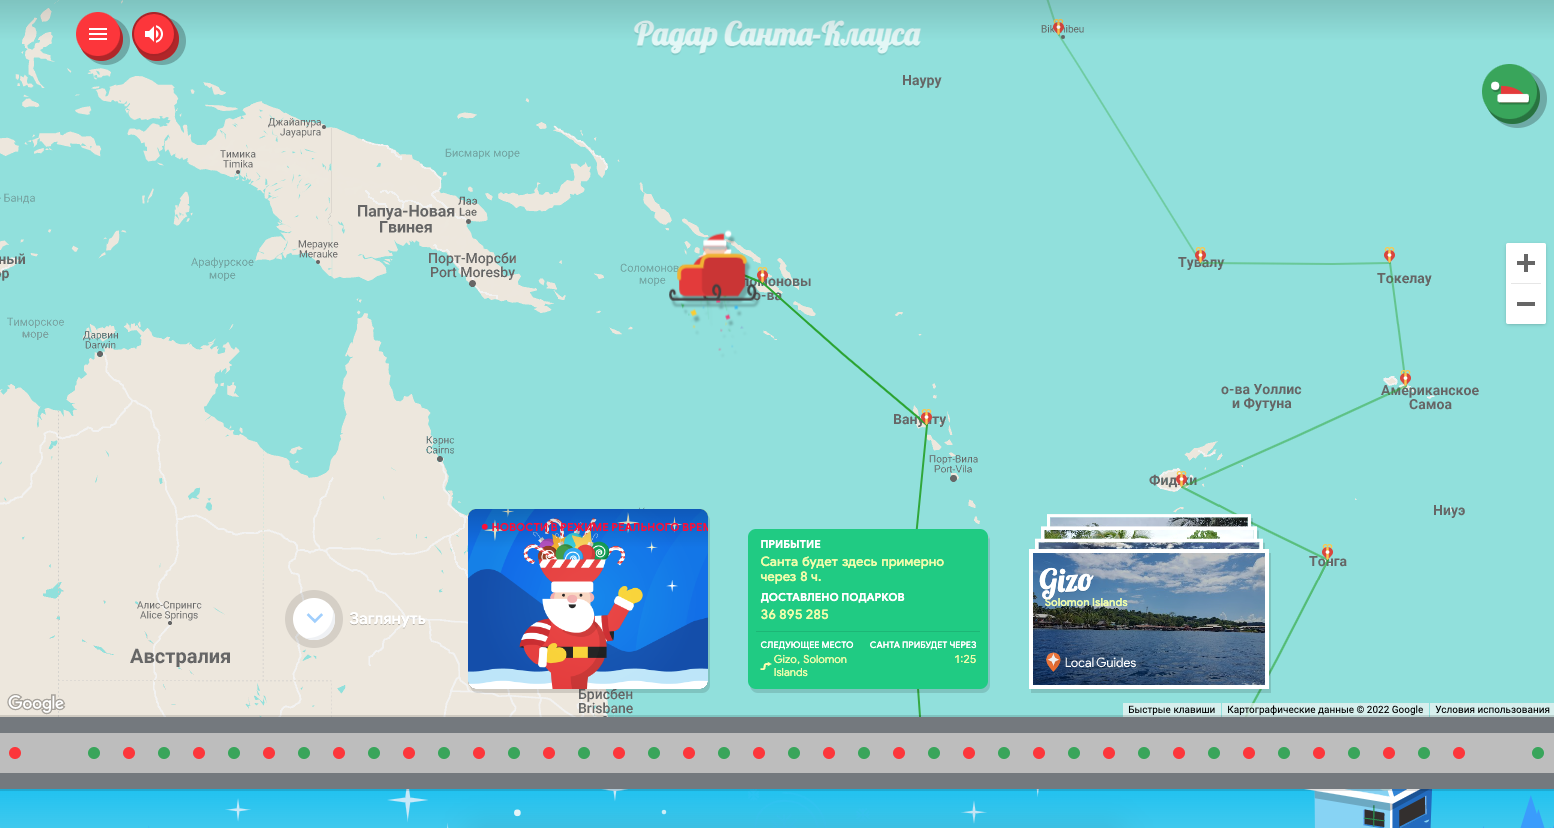 Сайт "Радар Санта-Клауса". Скриншот © santatracker.google.com